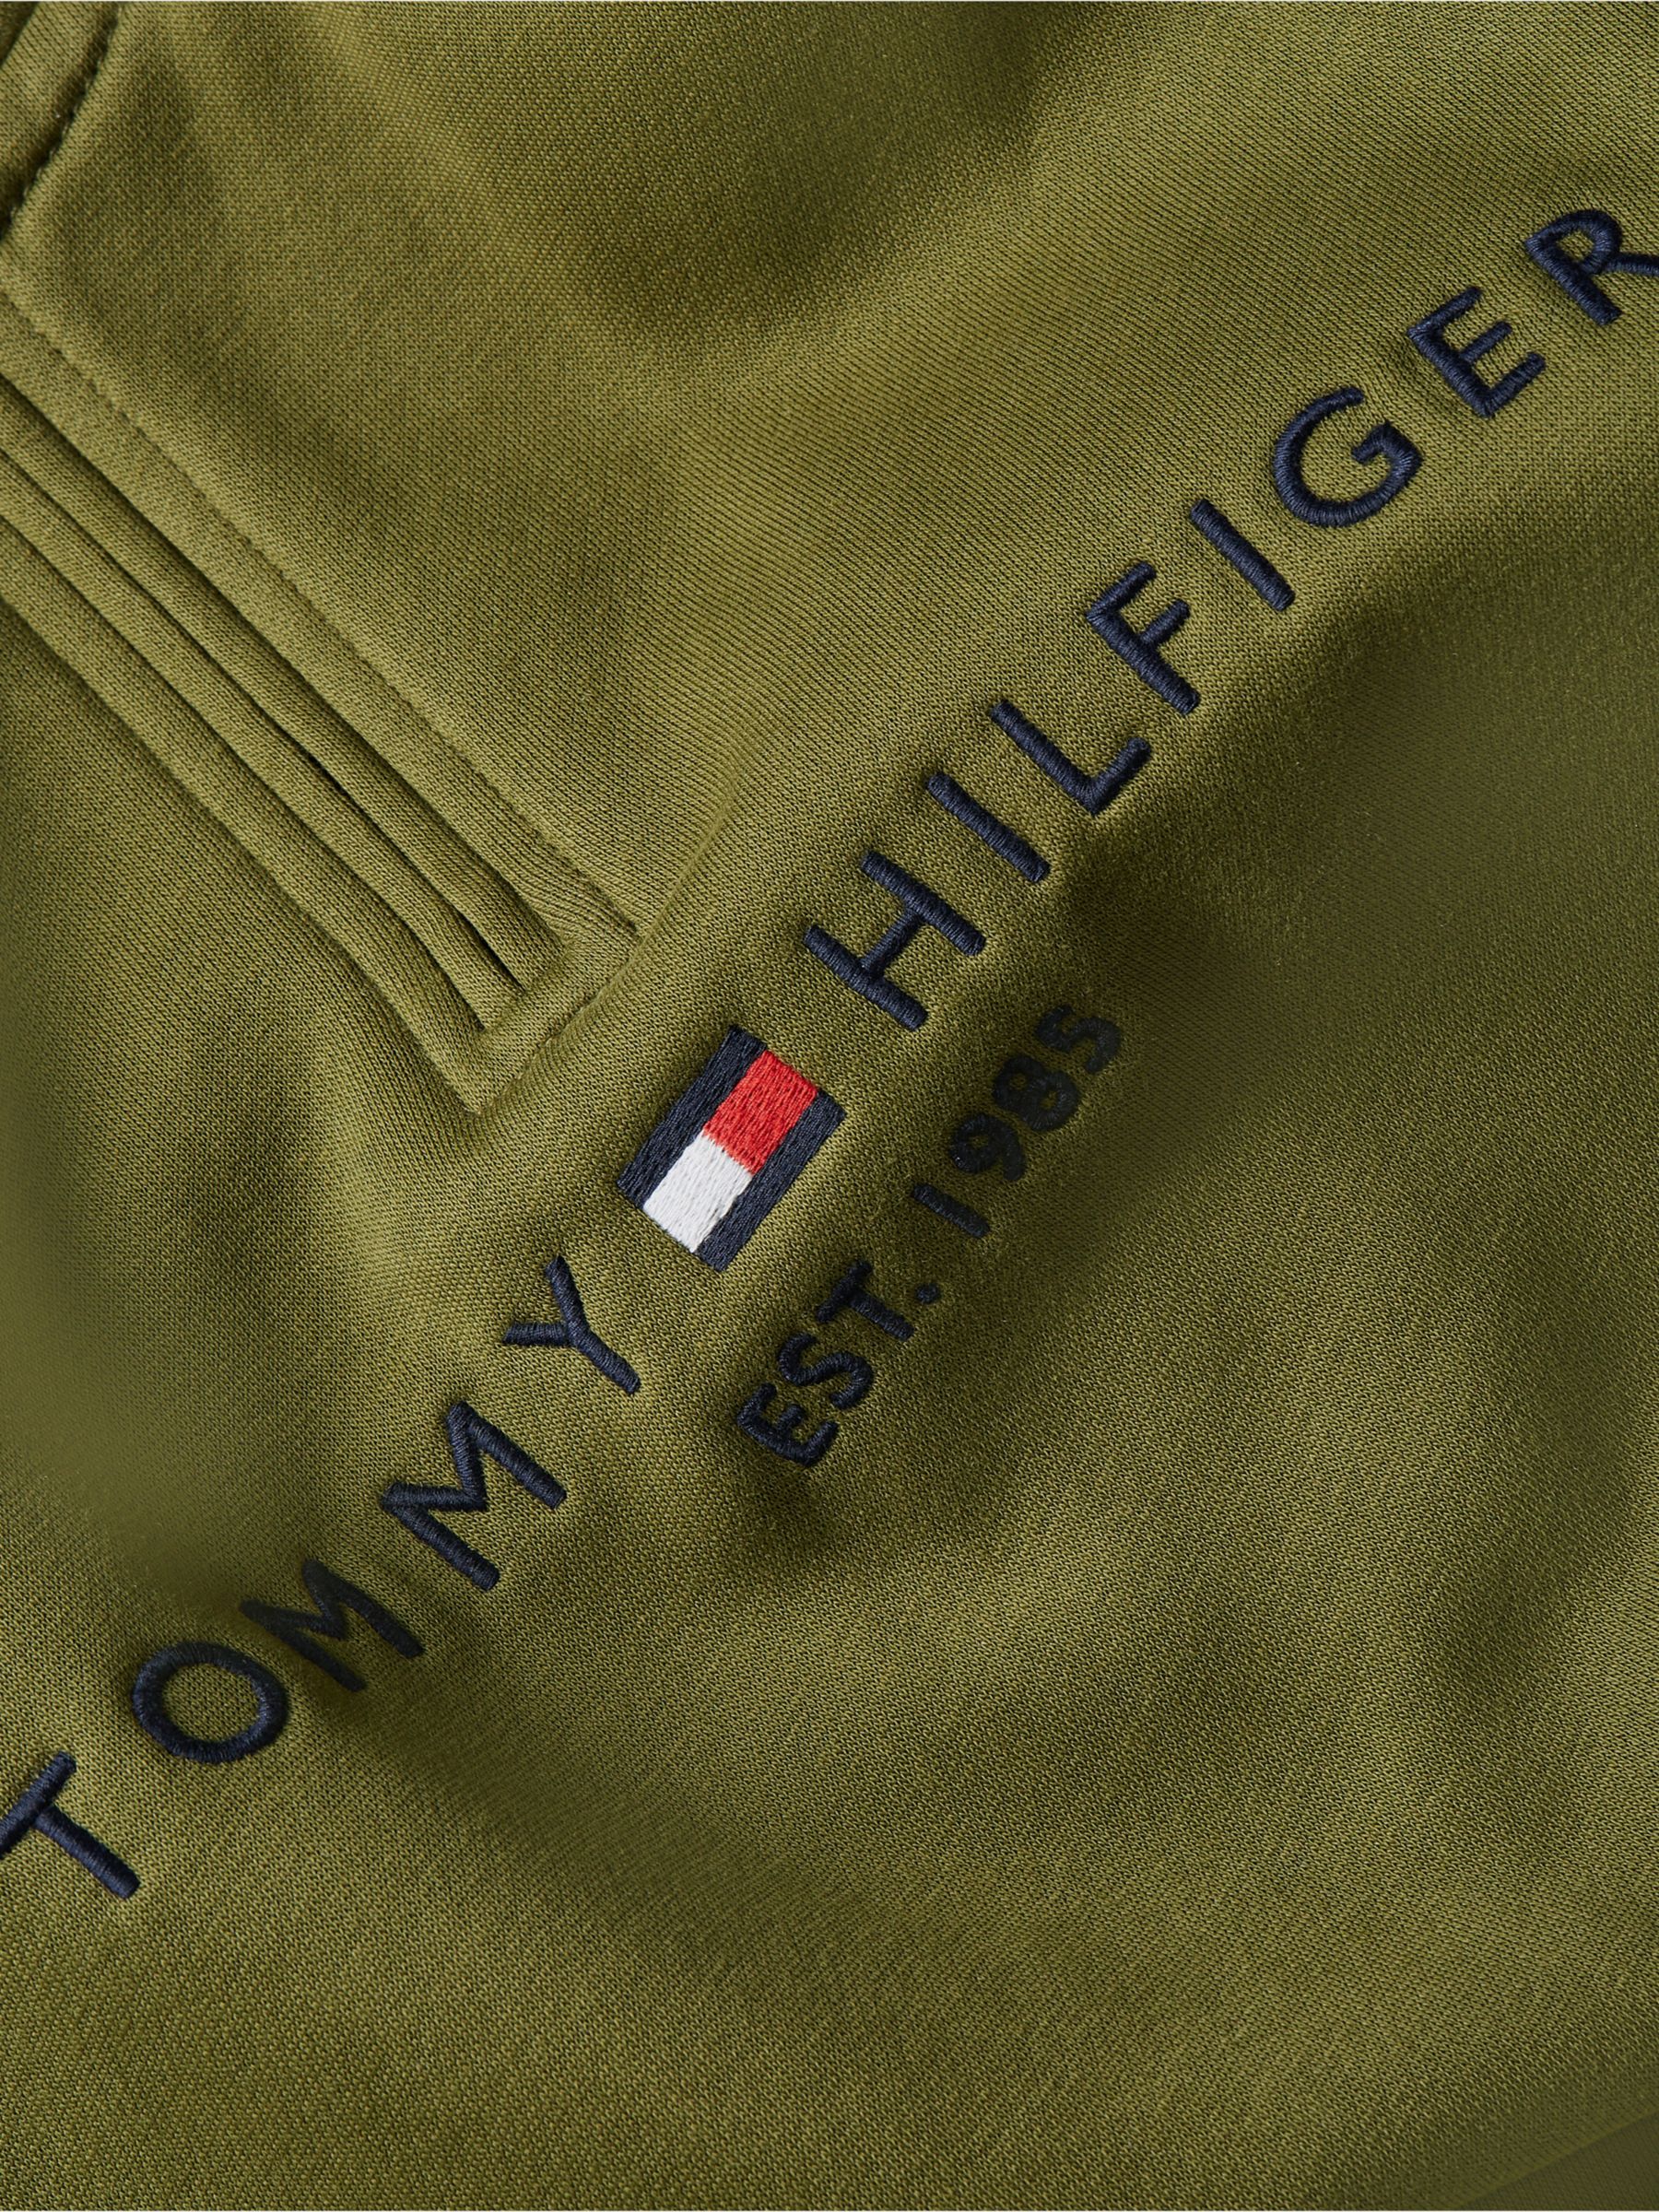 Tommy Hilfiger Mock Neck Sweatshirt, Green at John Lewis & Partners